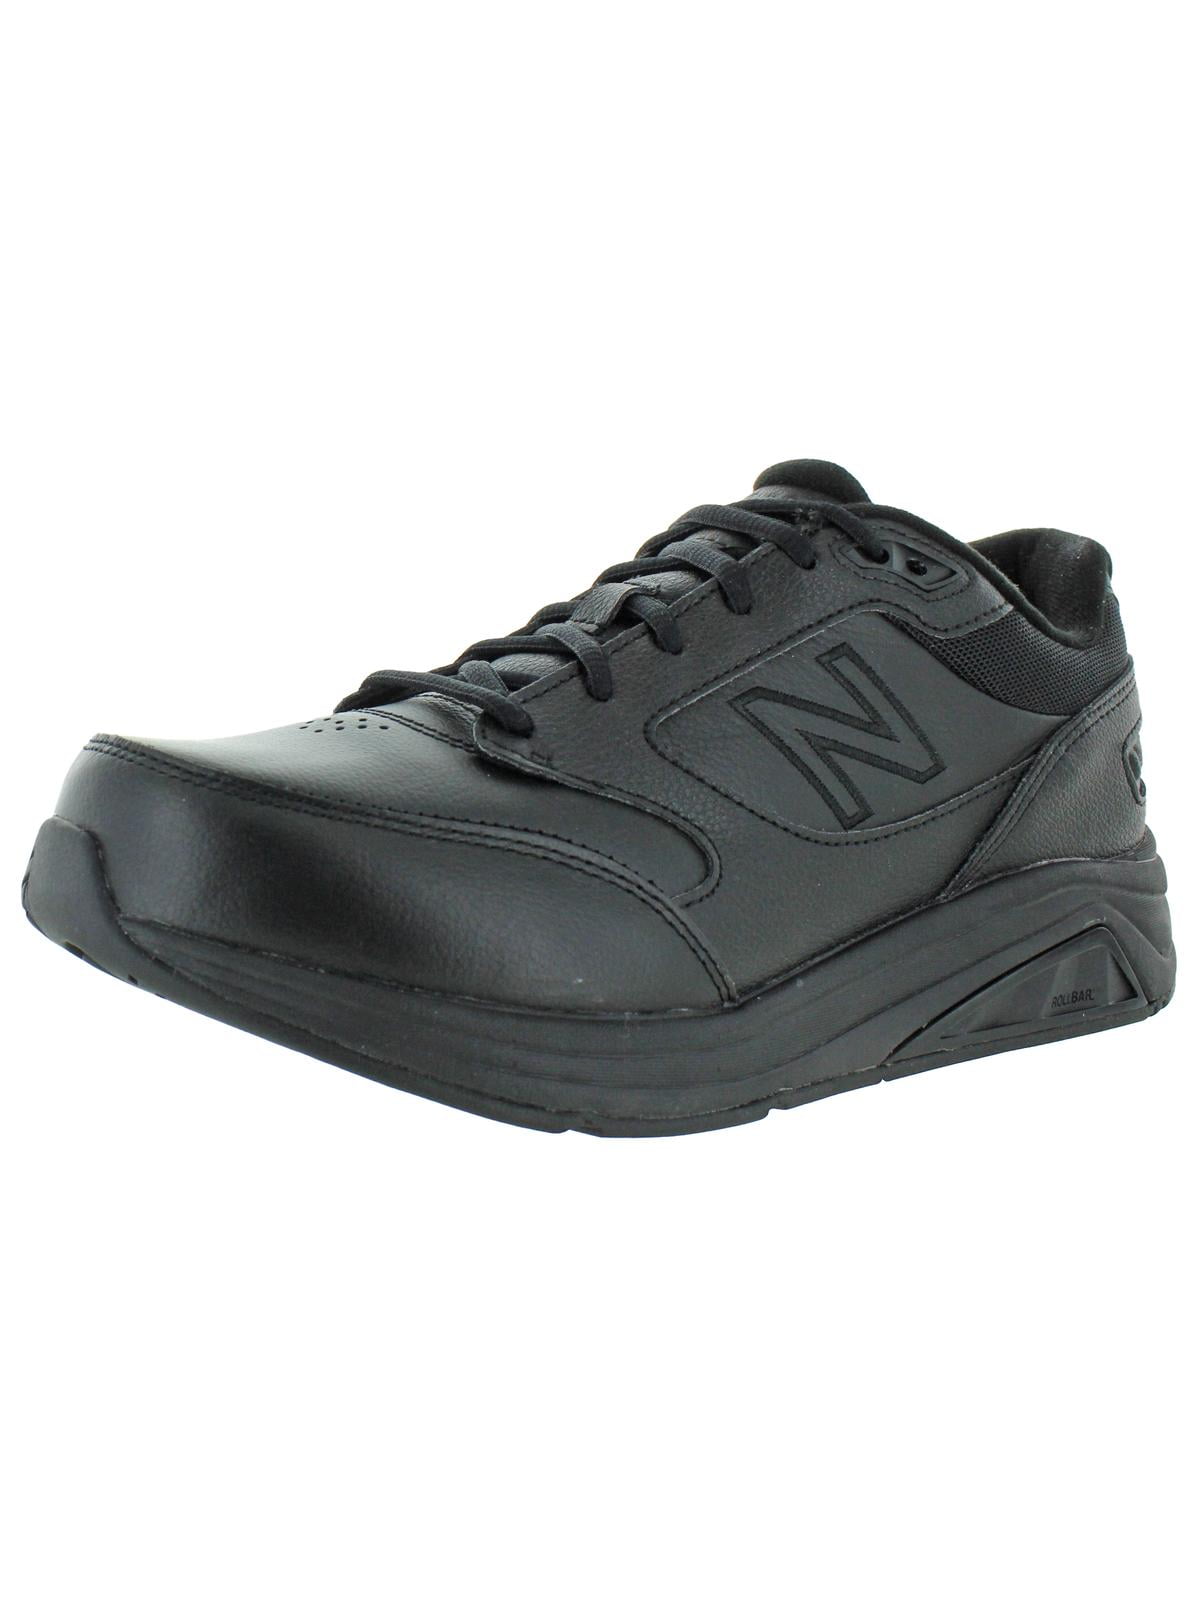 Men's New Balance 928v3 Walking Shoe - Walmart.com